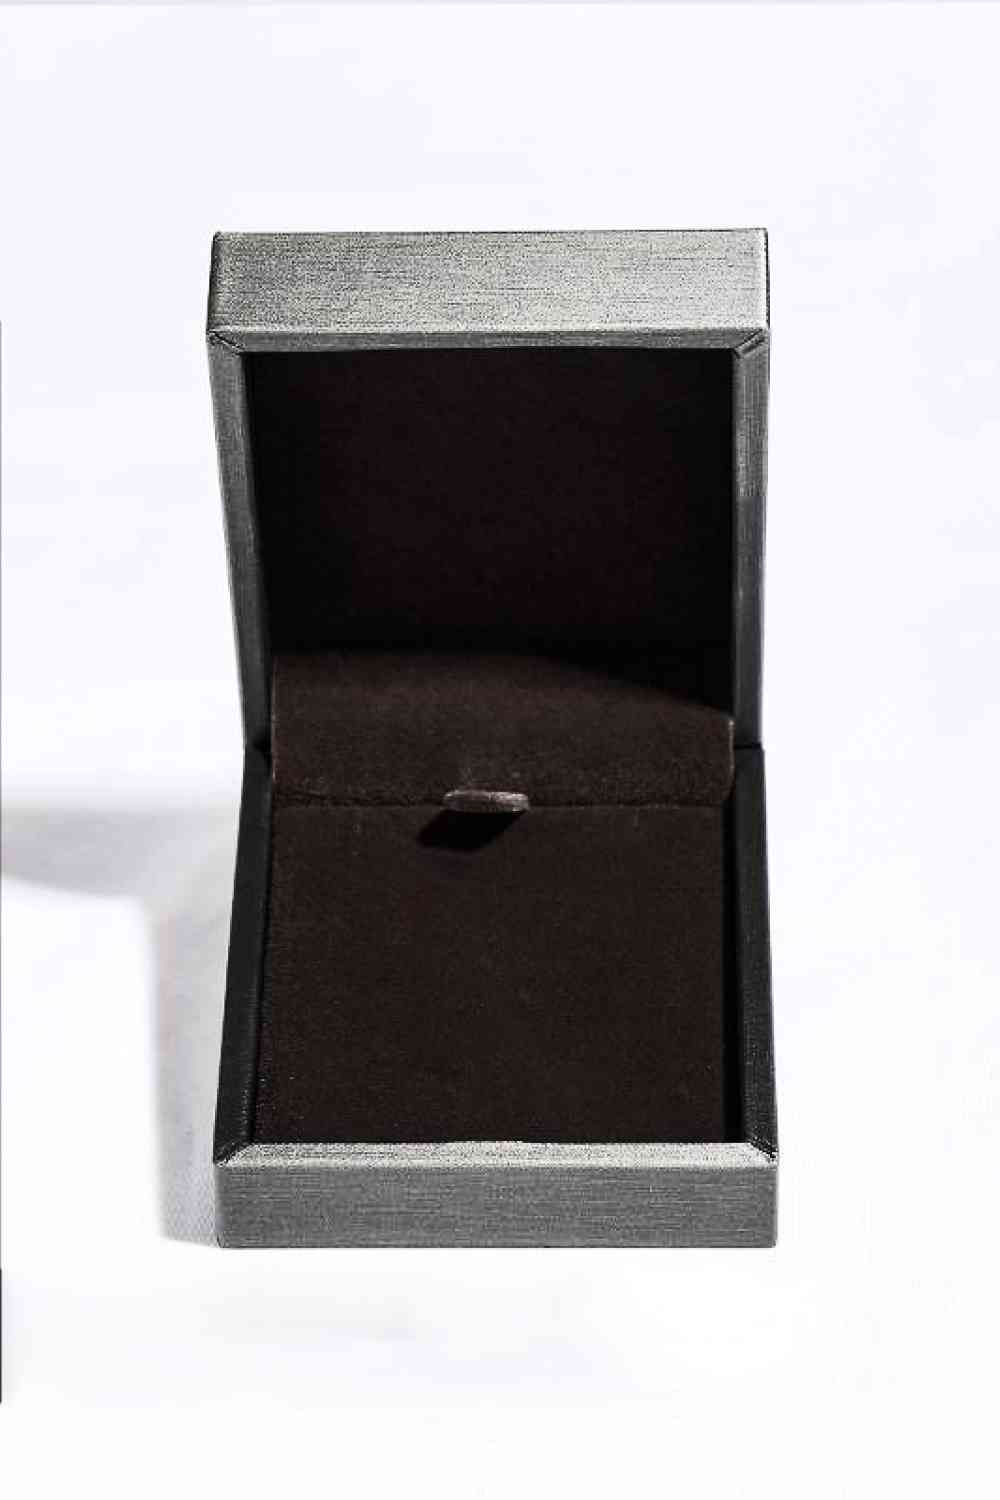 Bezaubernde 1-Karat-Moissanit-Anhänger-Halskette aus 925er-Sterlingsilber